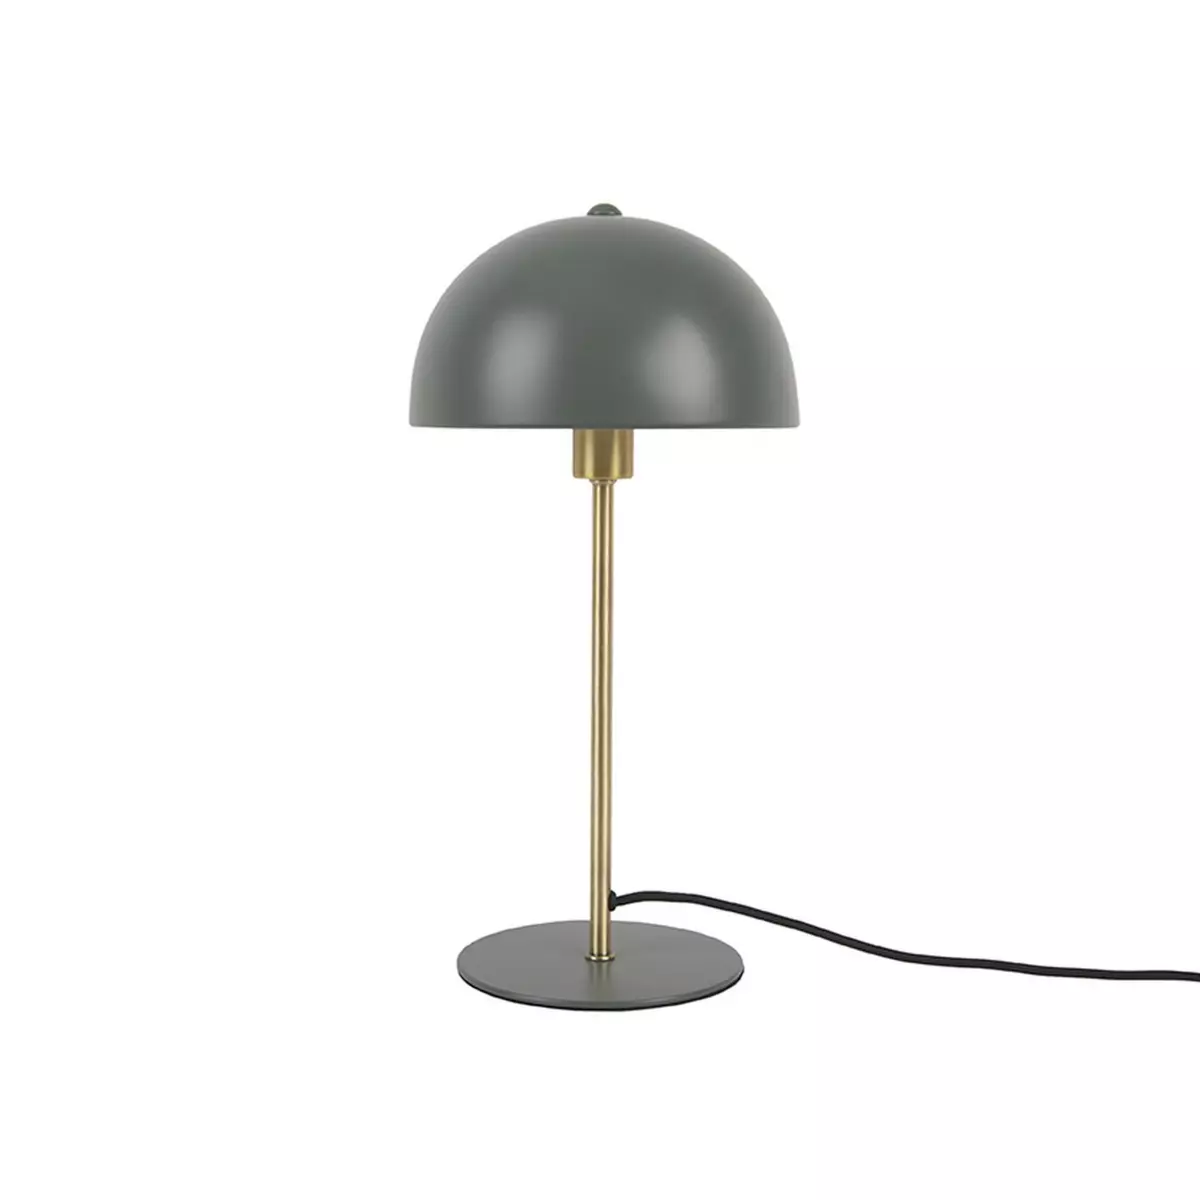 Leitmotiv Lampe à poser design métal Bonnet - H. 39 cm -Vert Jungle